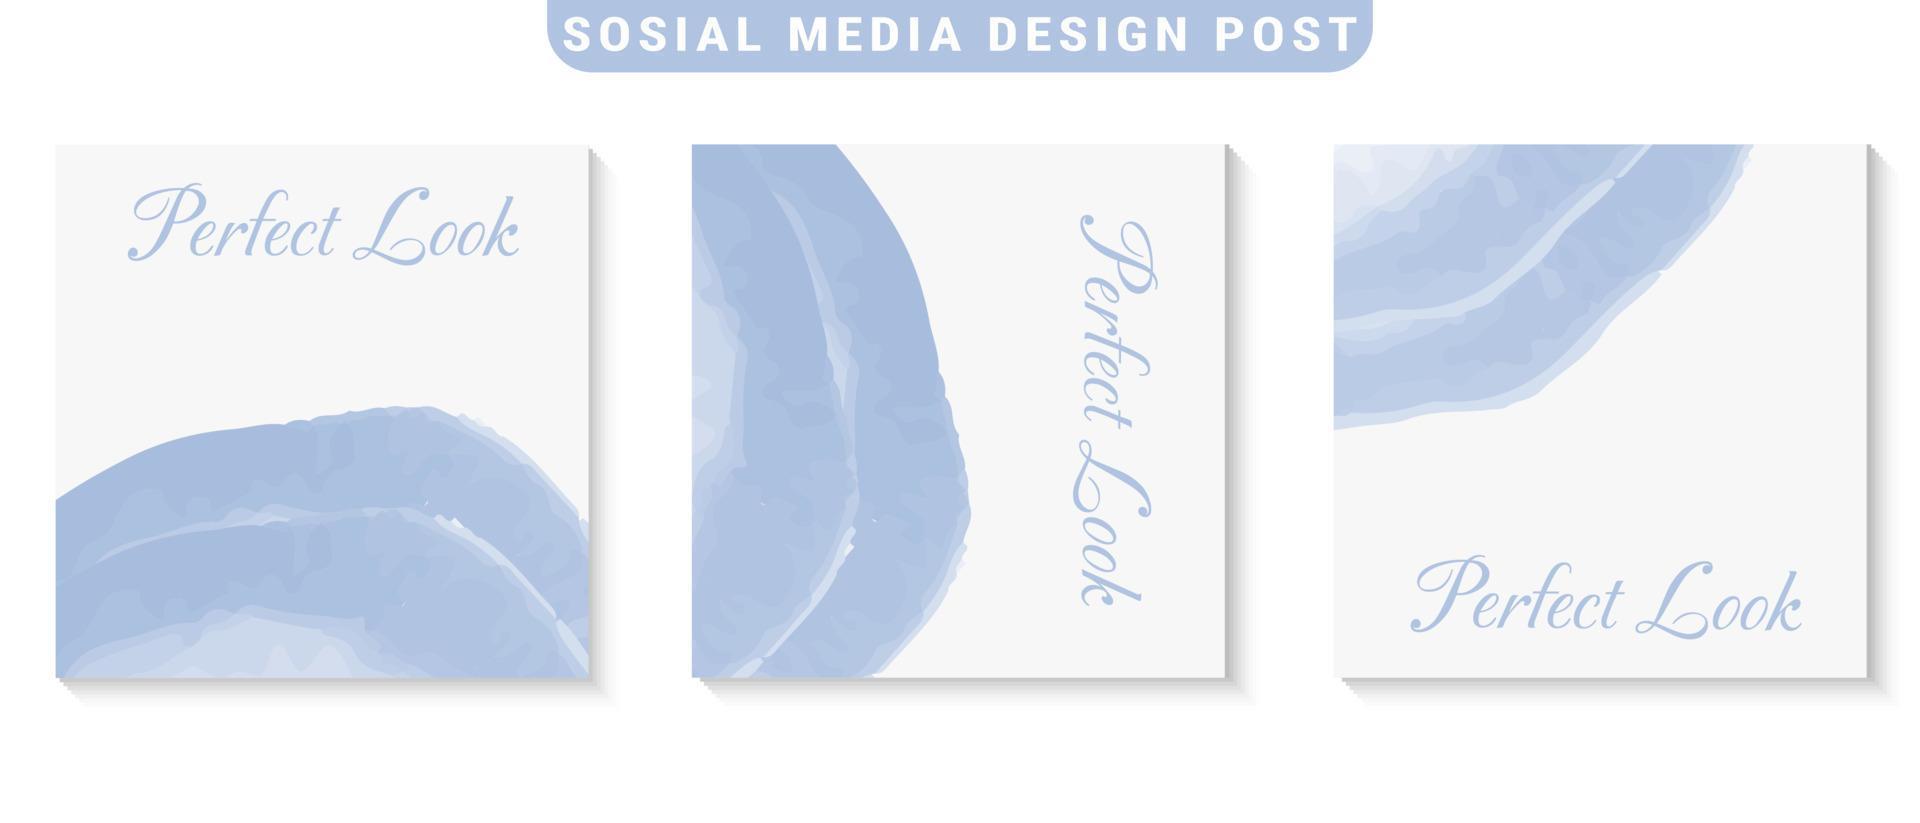 media social post template set collection vector